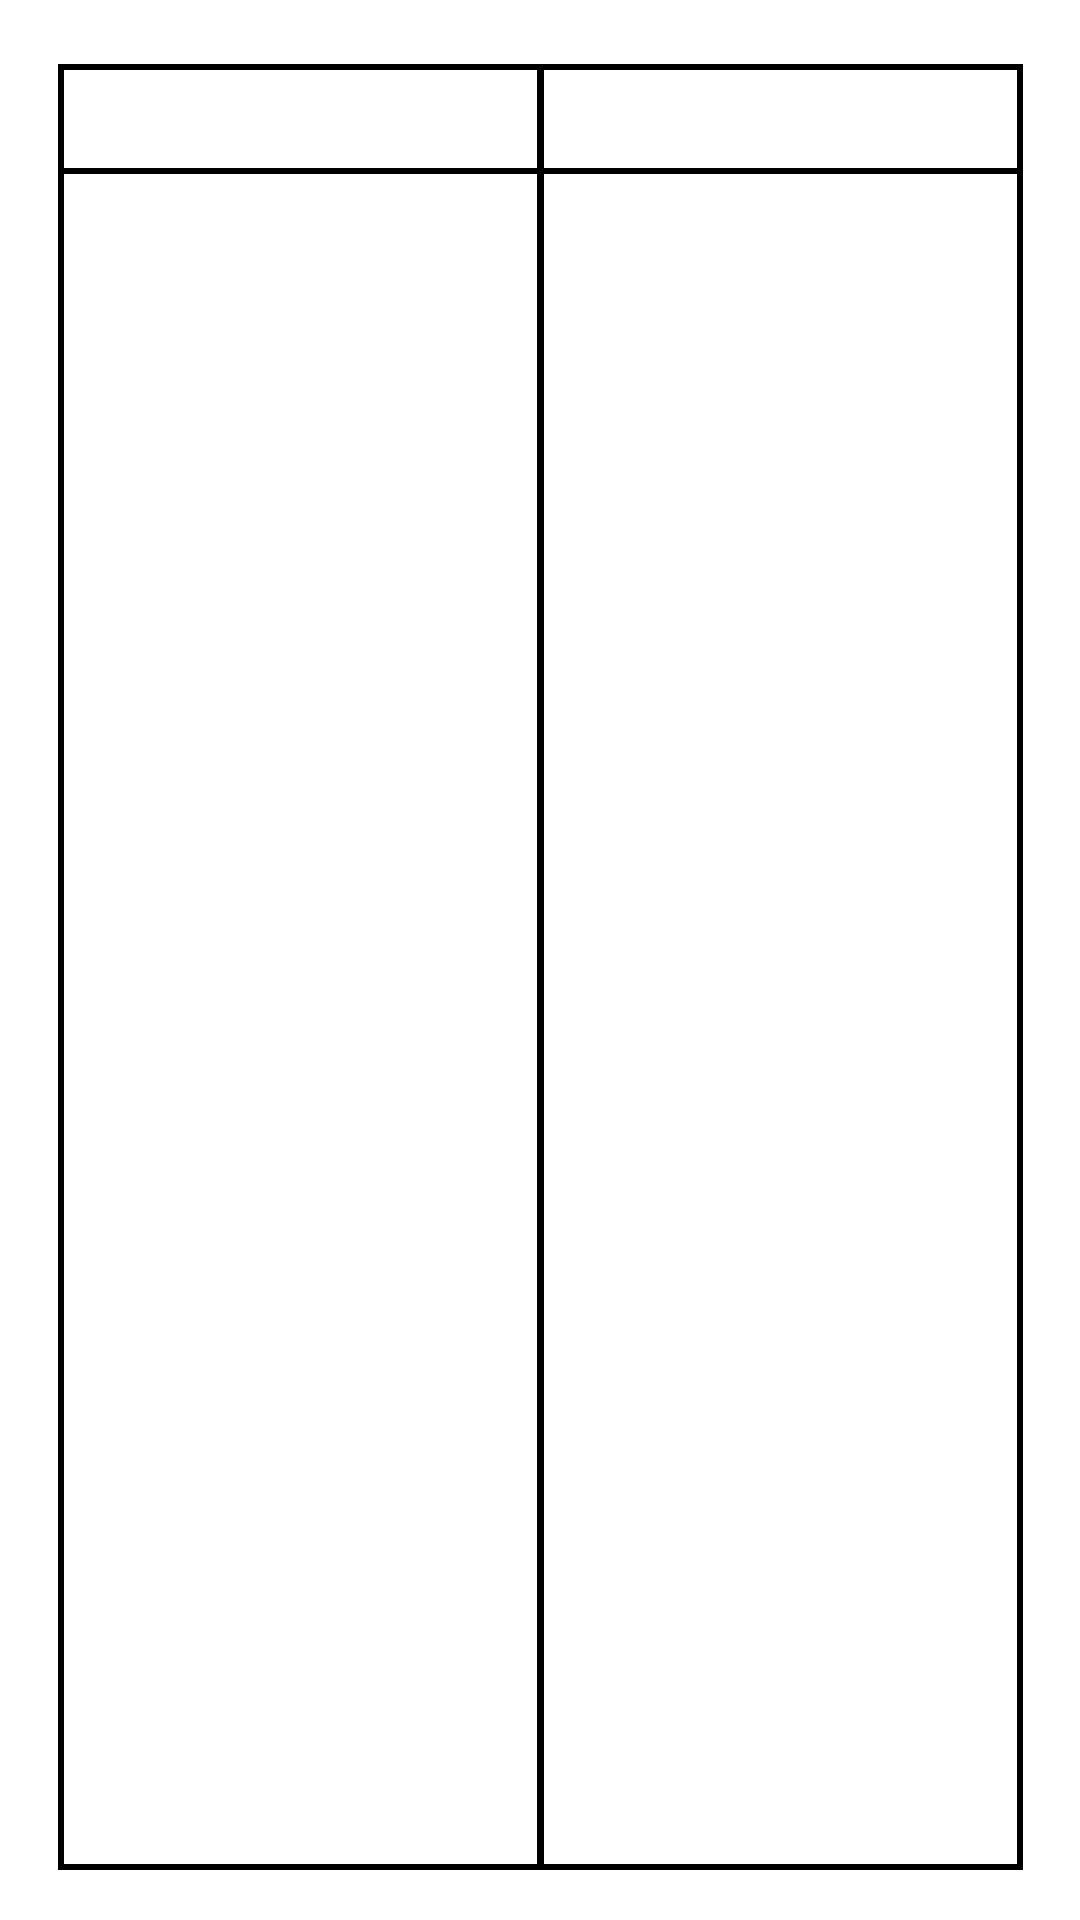 Blank 2 Column Chart Template Image